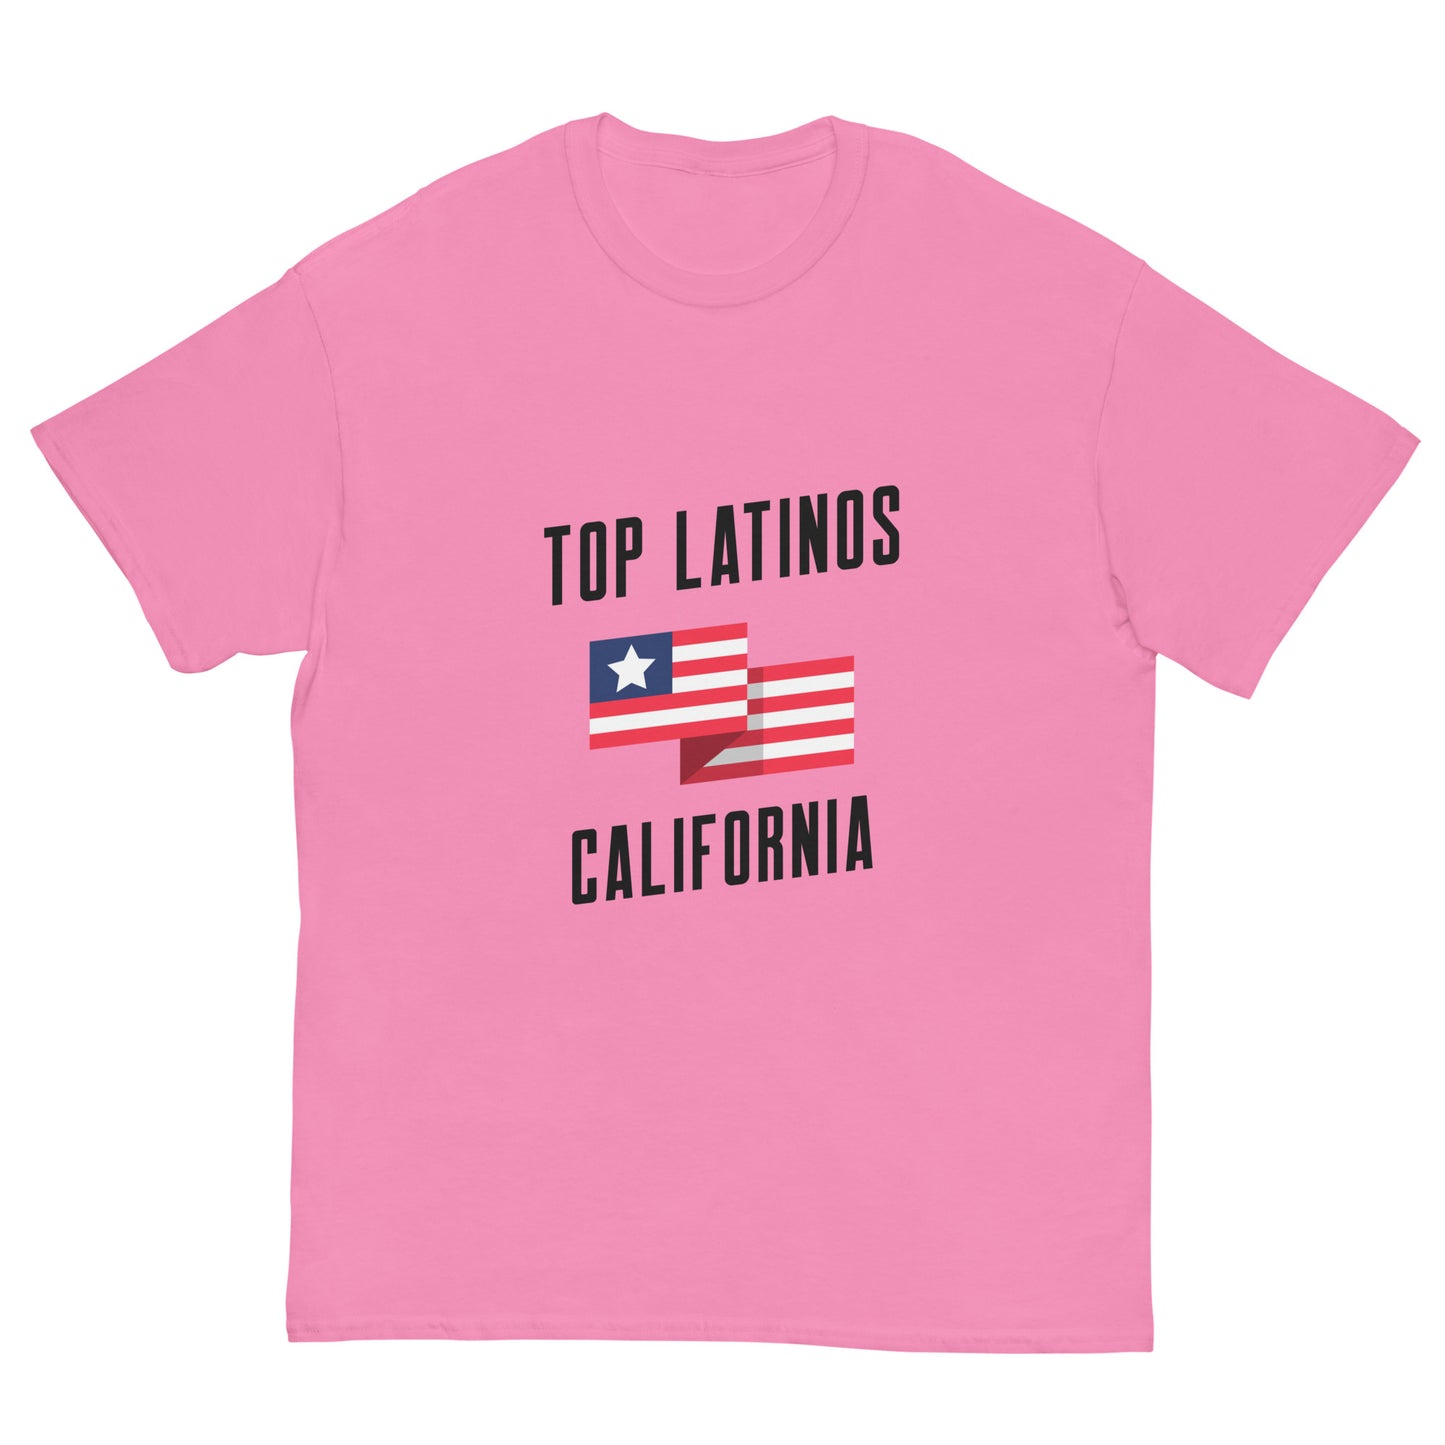 Top Latinos California classic tee